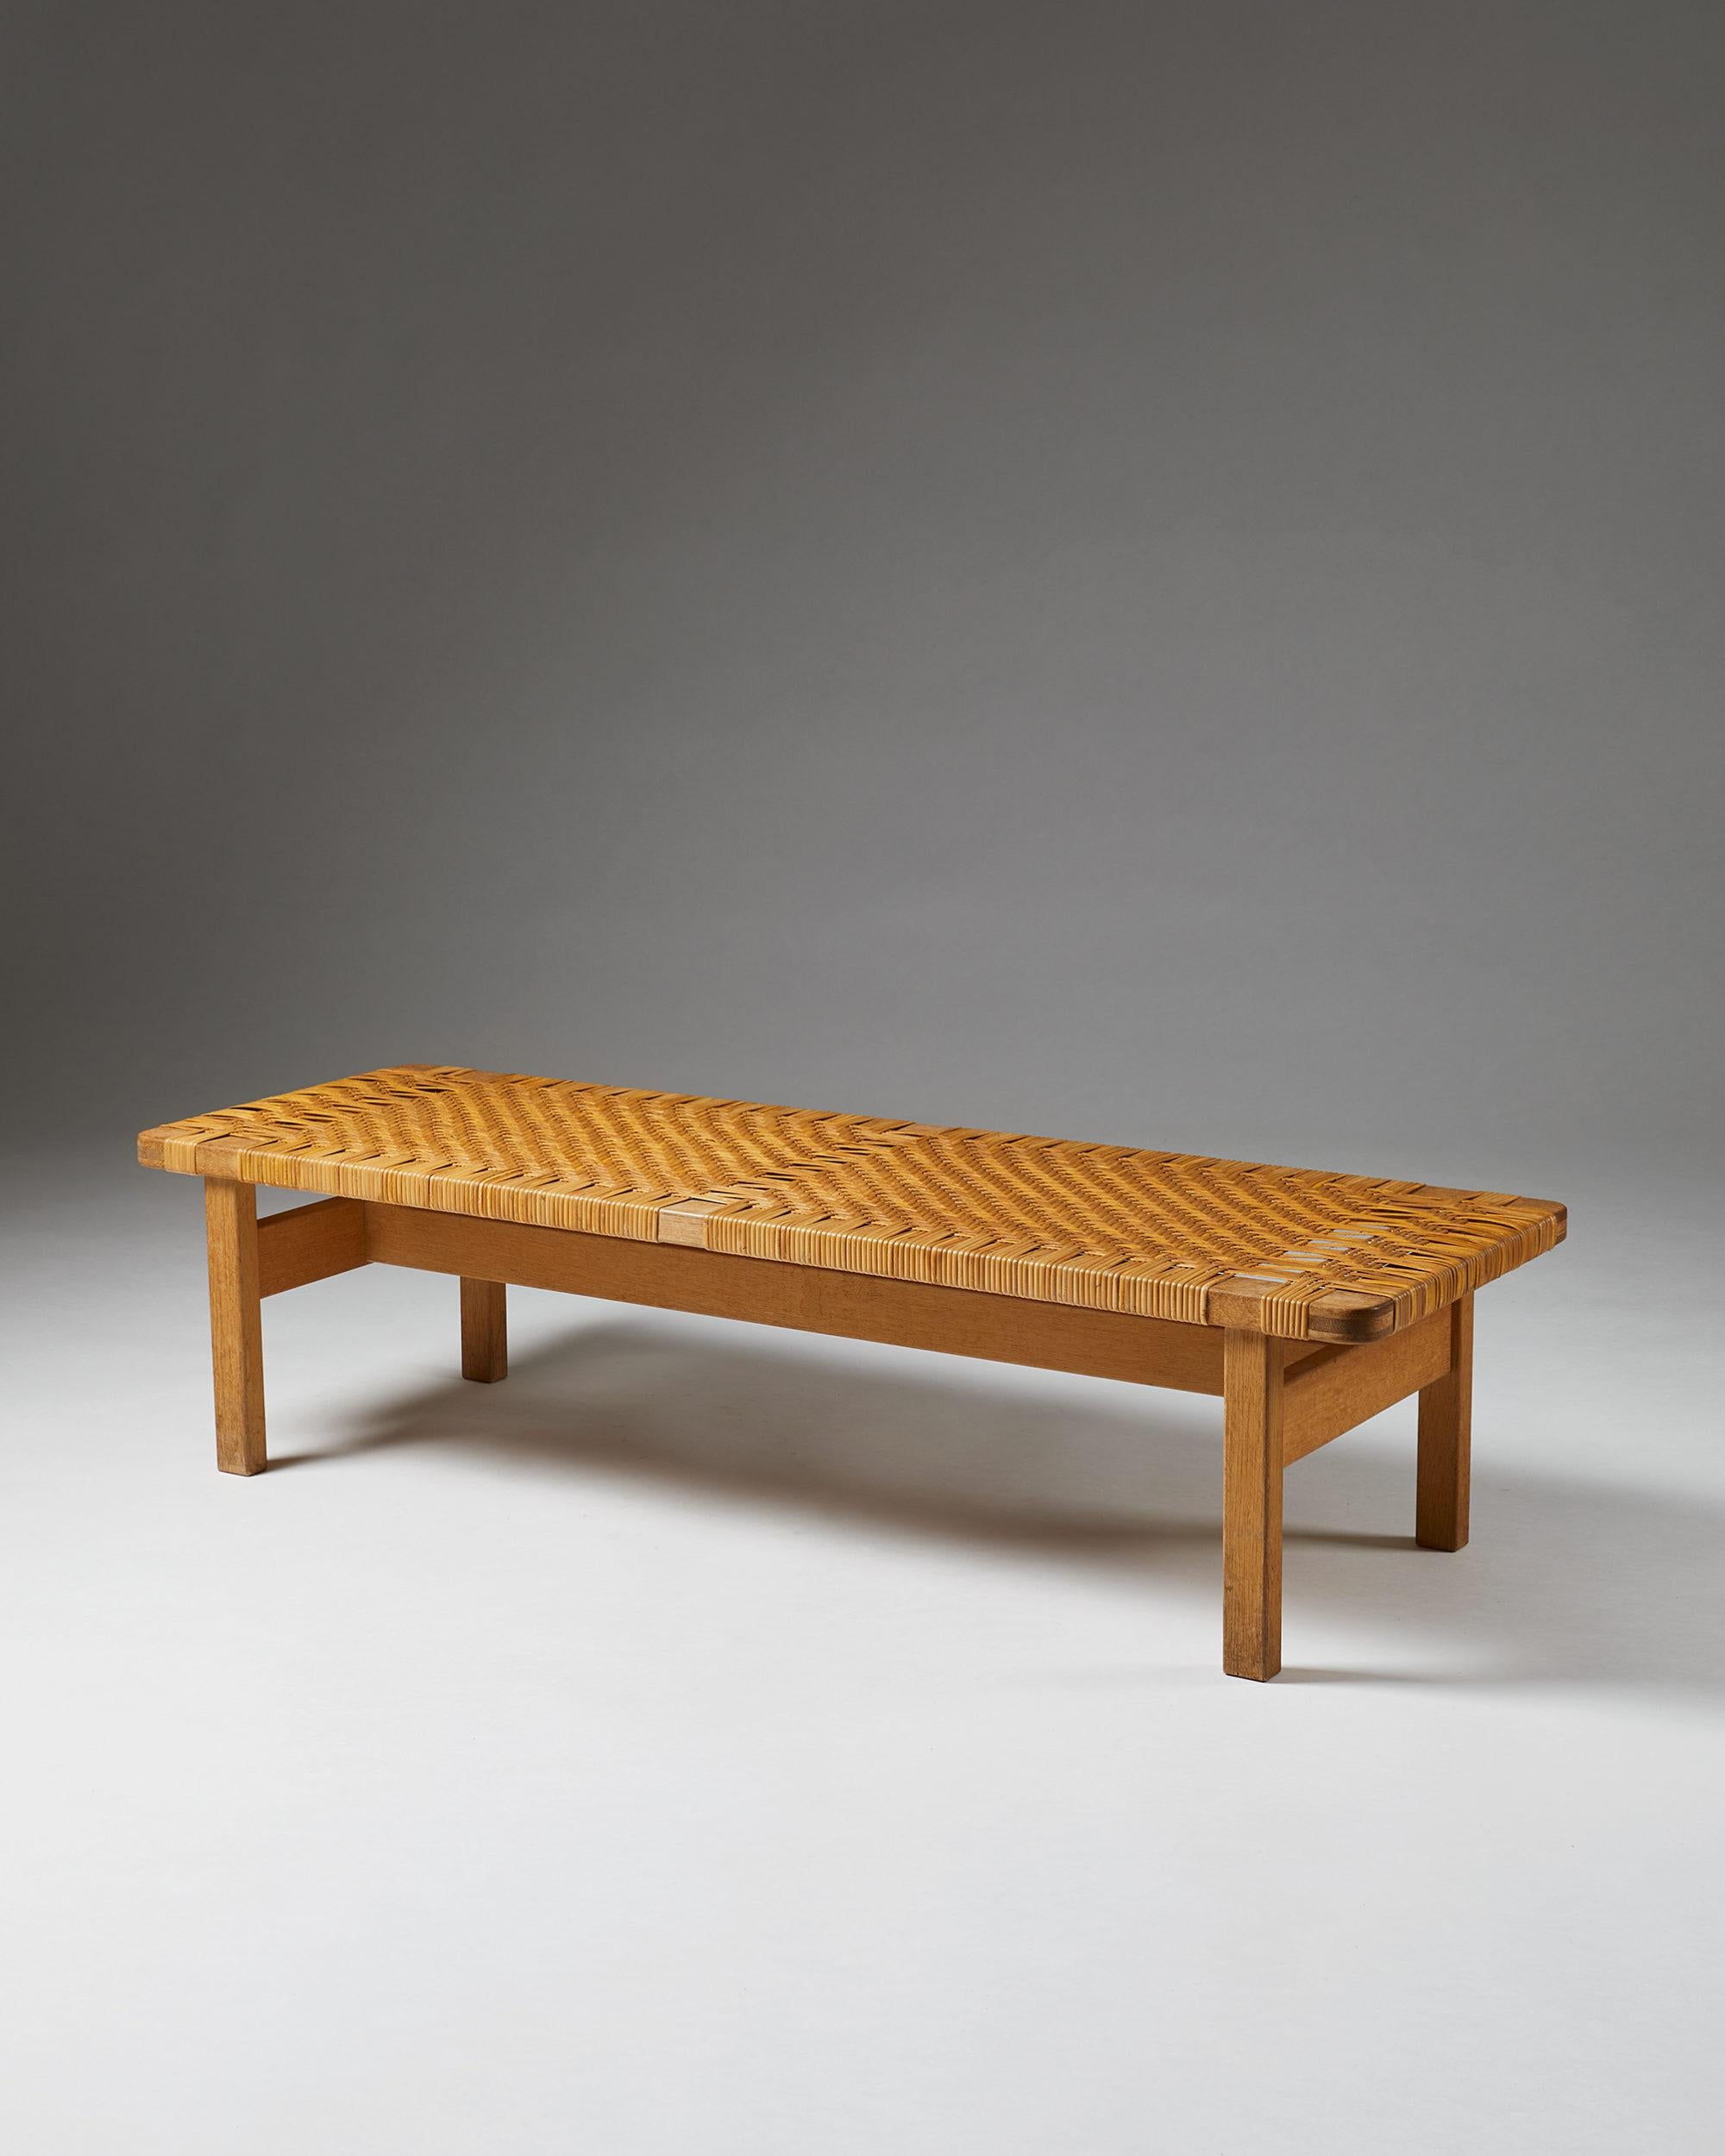 Occasional table/bench model 5272 designed by Börge Mogensen for Fredericia Stolefabrik, Denmark, 1950s.
Oak and cane.

Measures: H 34.5 cm/ 13 5/8